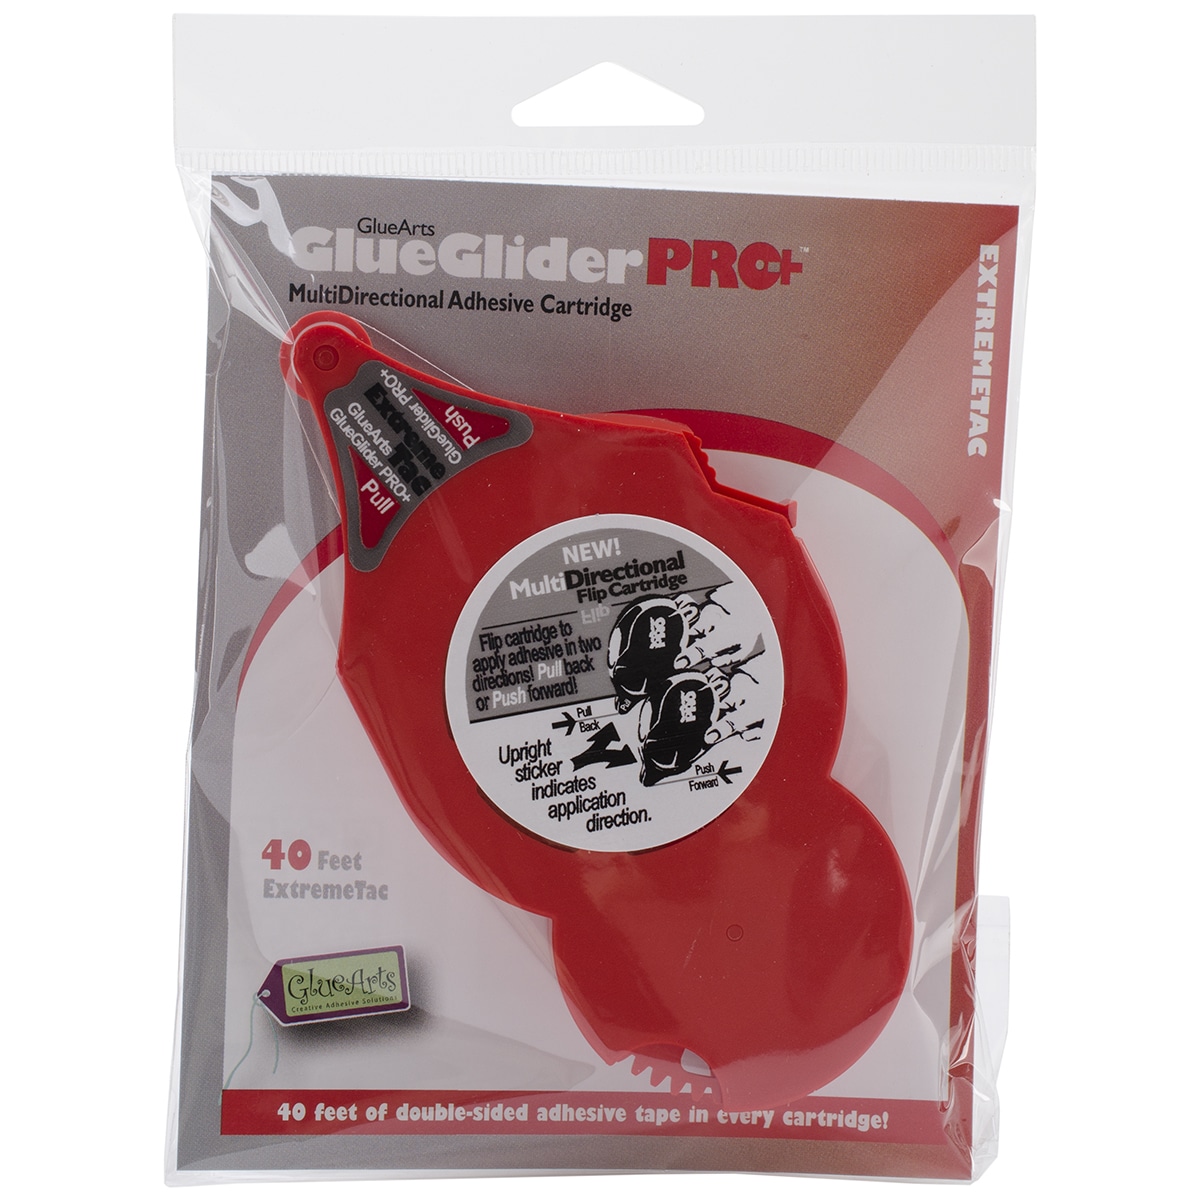 Glueglider Pro Plus Refill Cartridge extreme, .312inx40ft